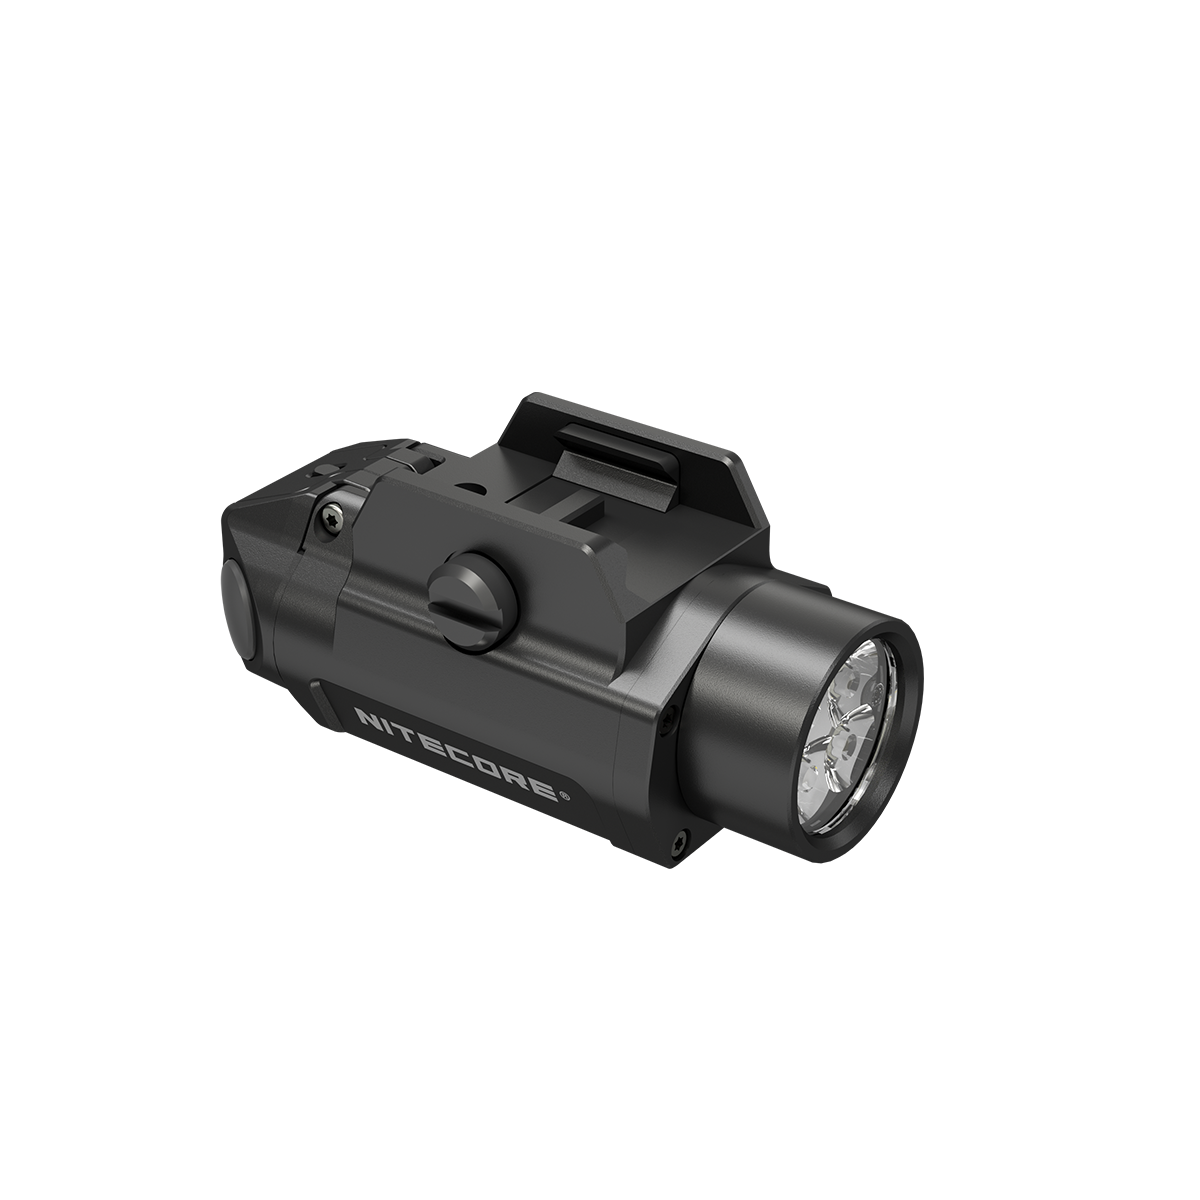 NPL30 Weapon Mounted Light